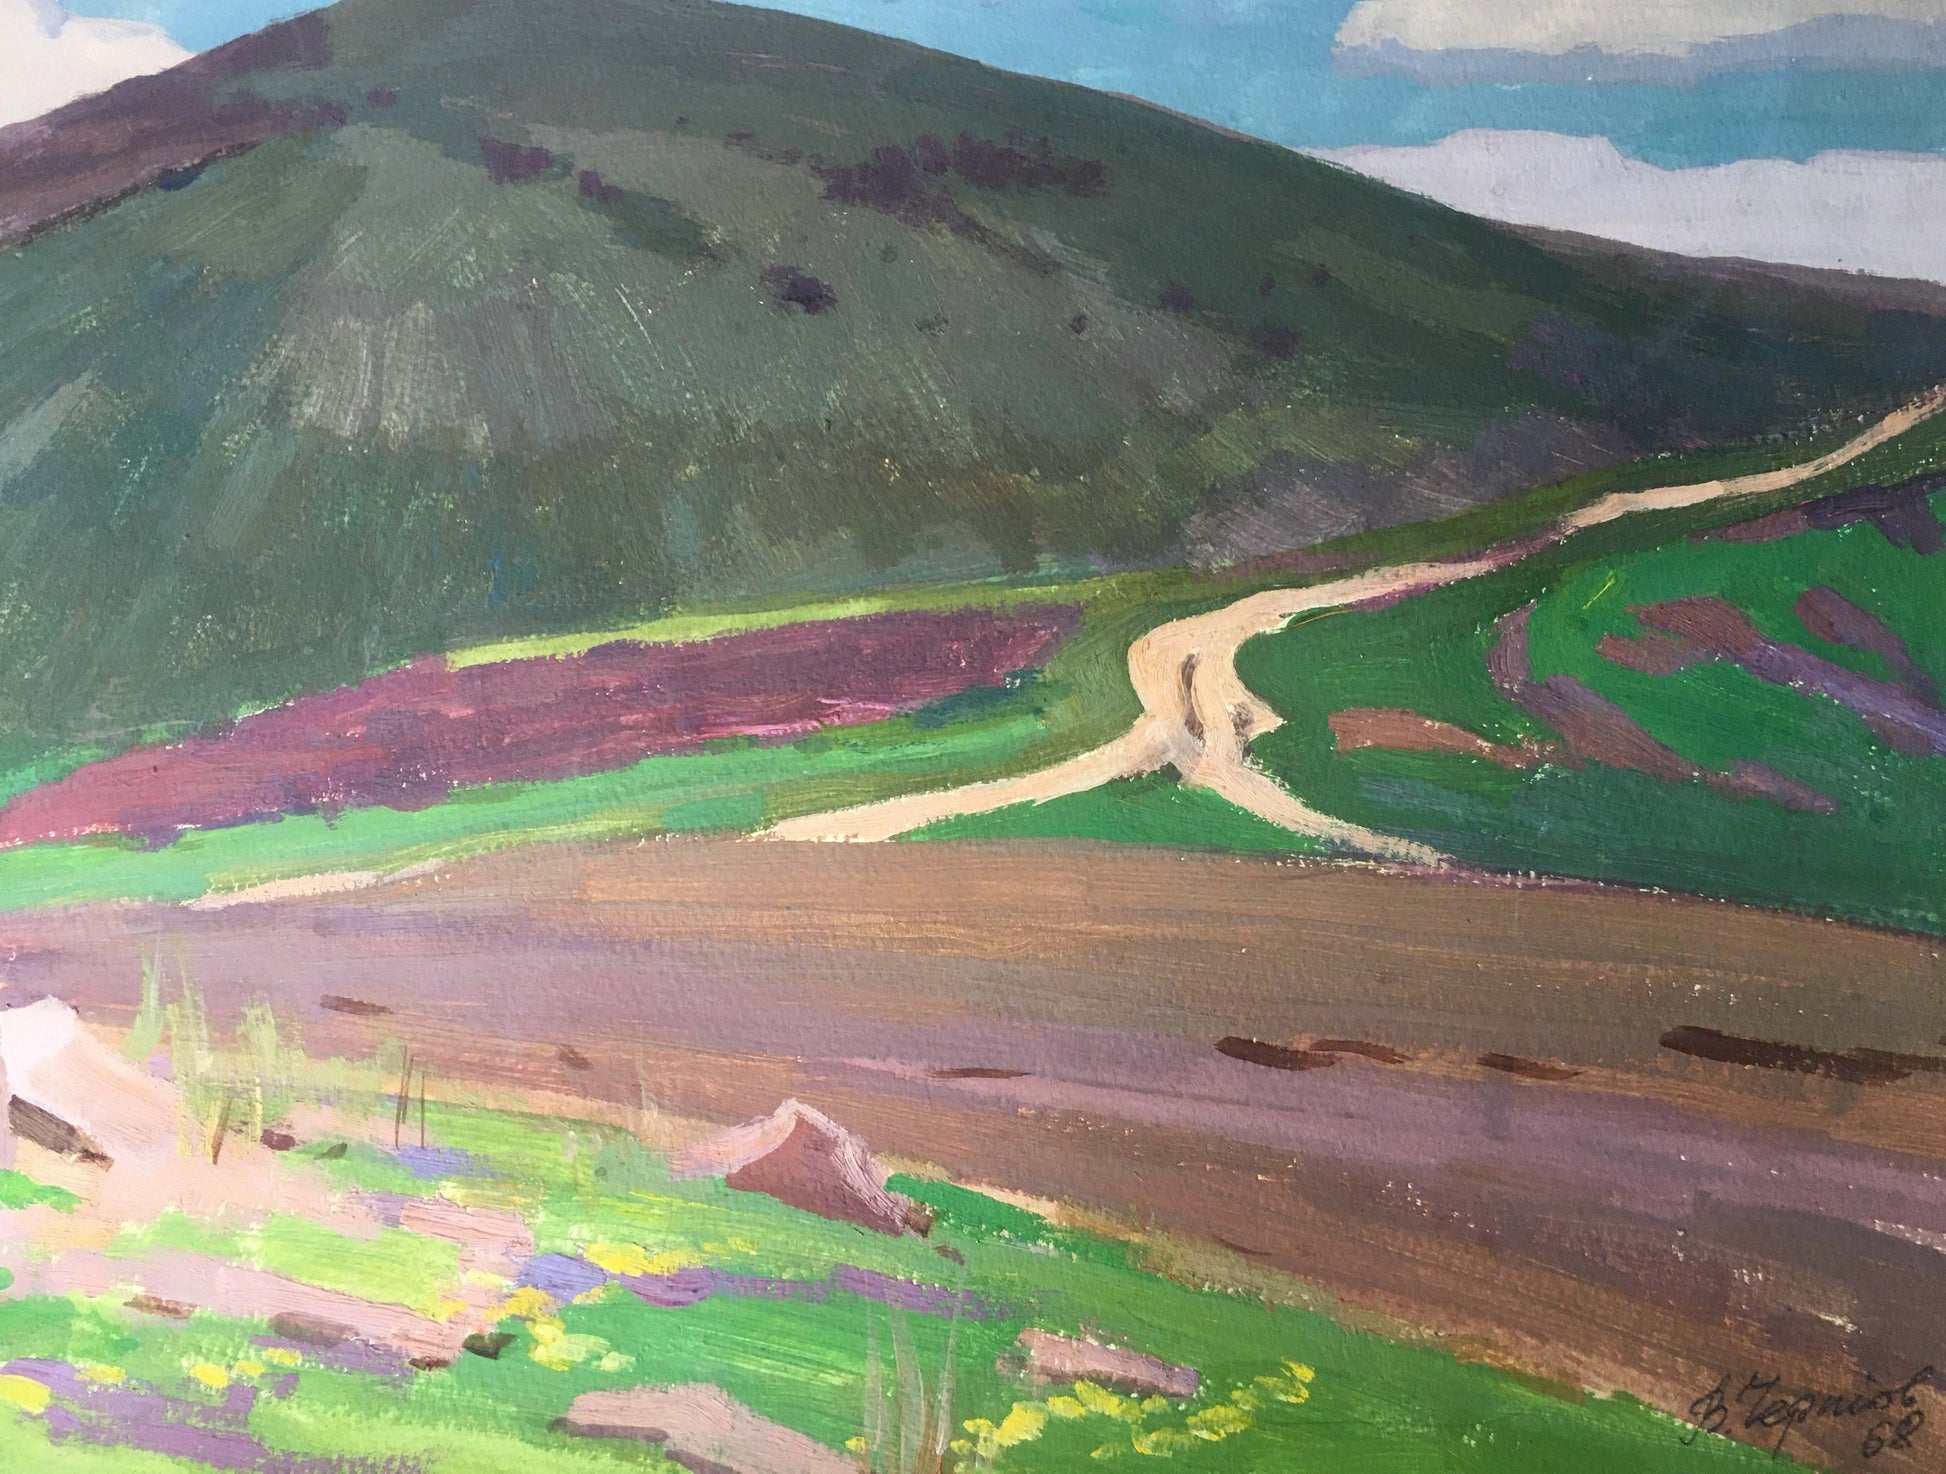 Gouache artwork featuring a "Mountain Landscape" by Vladimir Chernikov